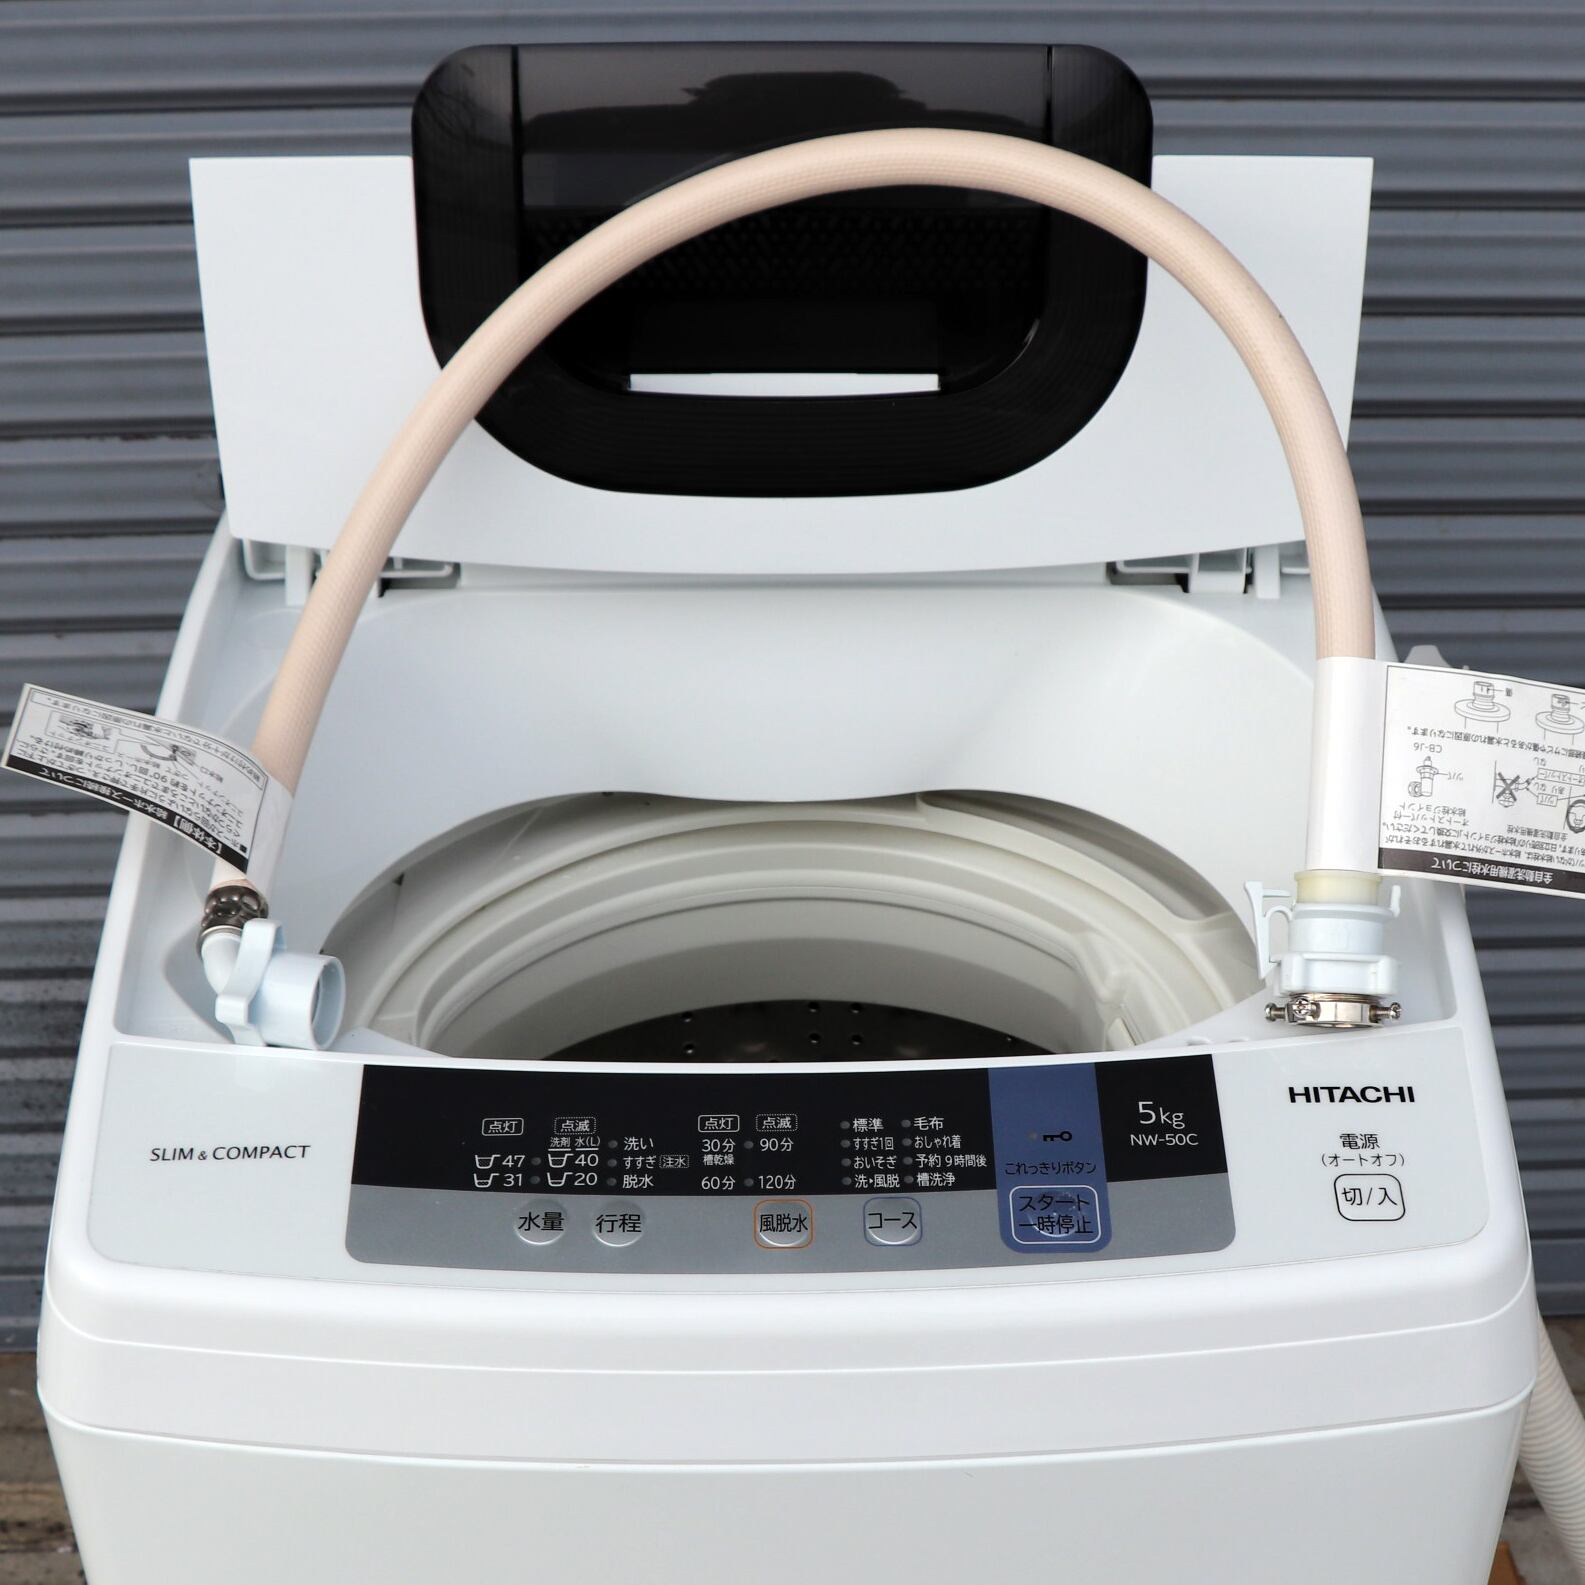 iΦ HITACHI 日立全自動電気洗濯機 NW-50C 5kg 2019年製